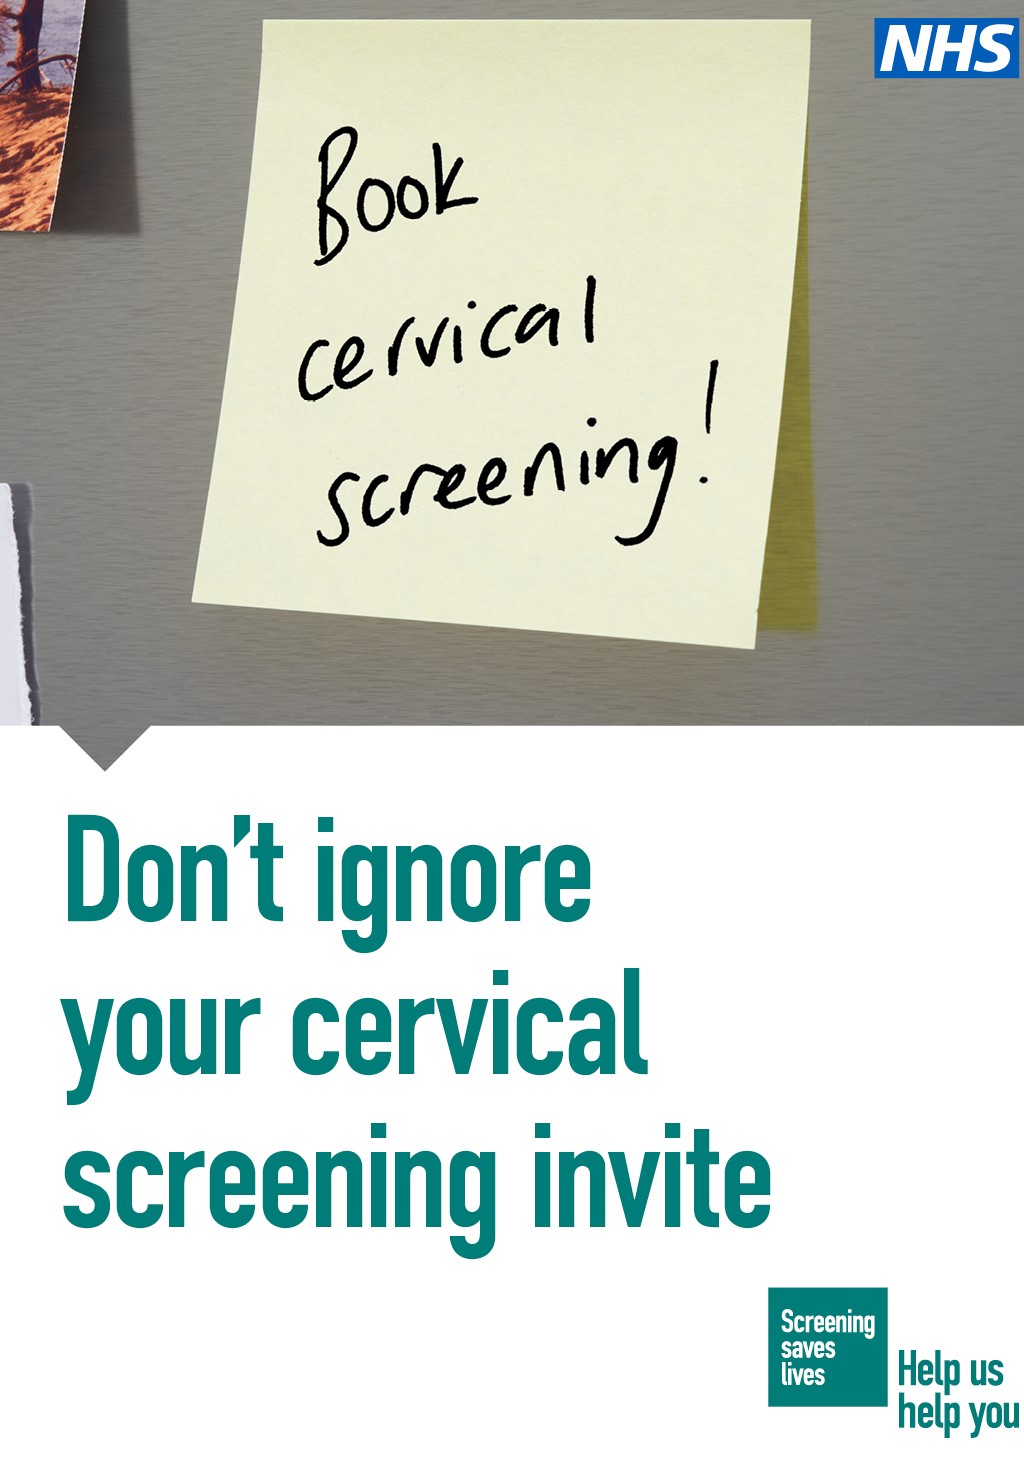 cervical screening